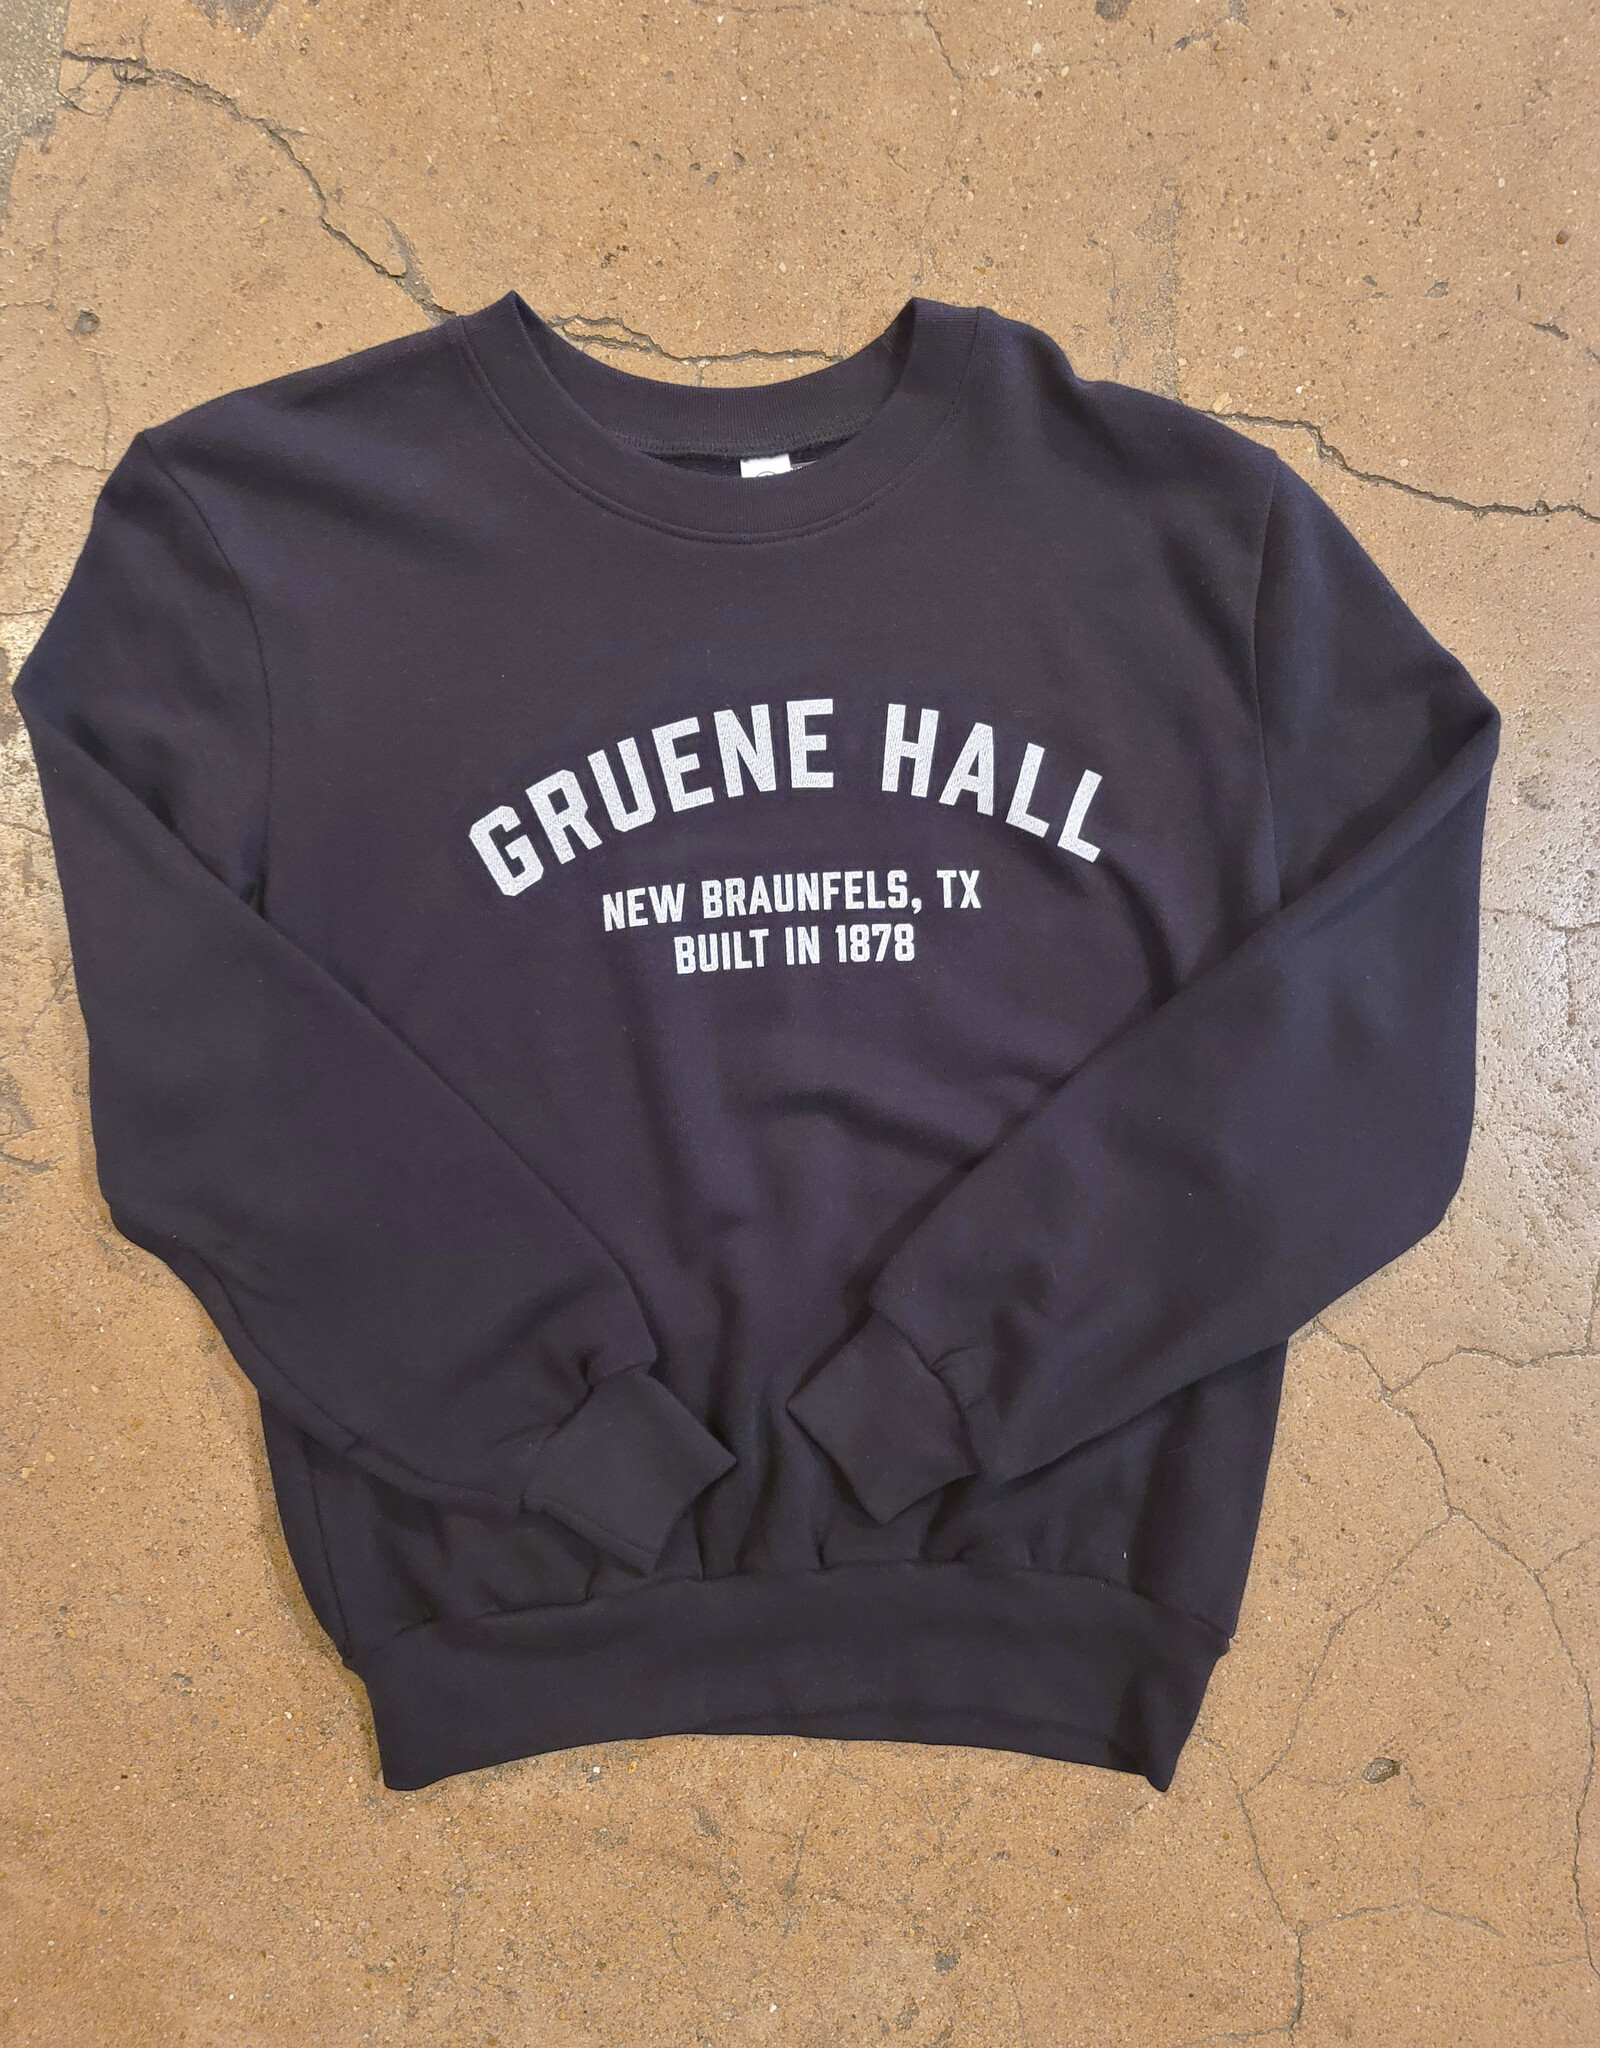 Gruene Hall 1878 Sweatshirt